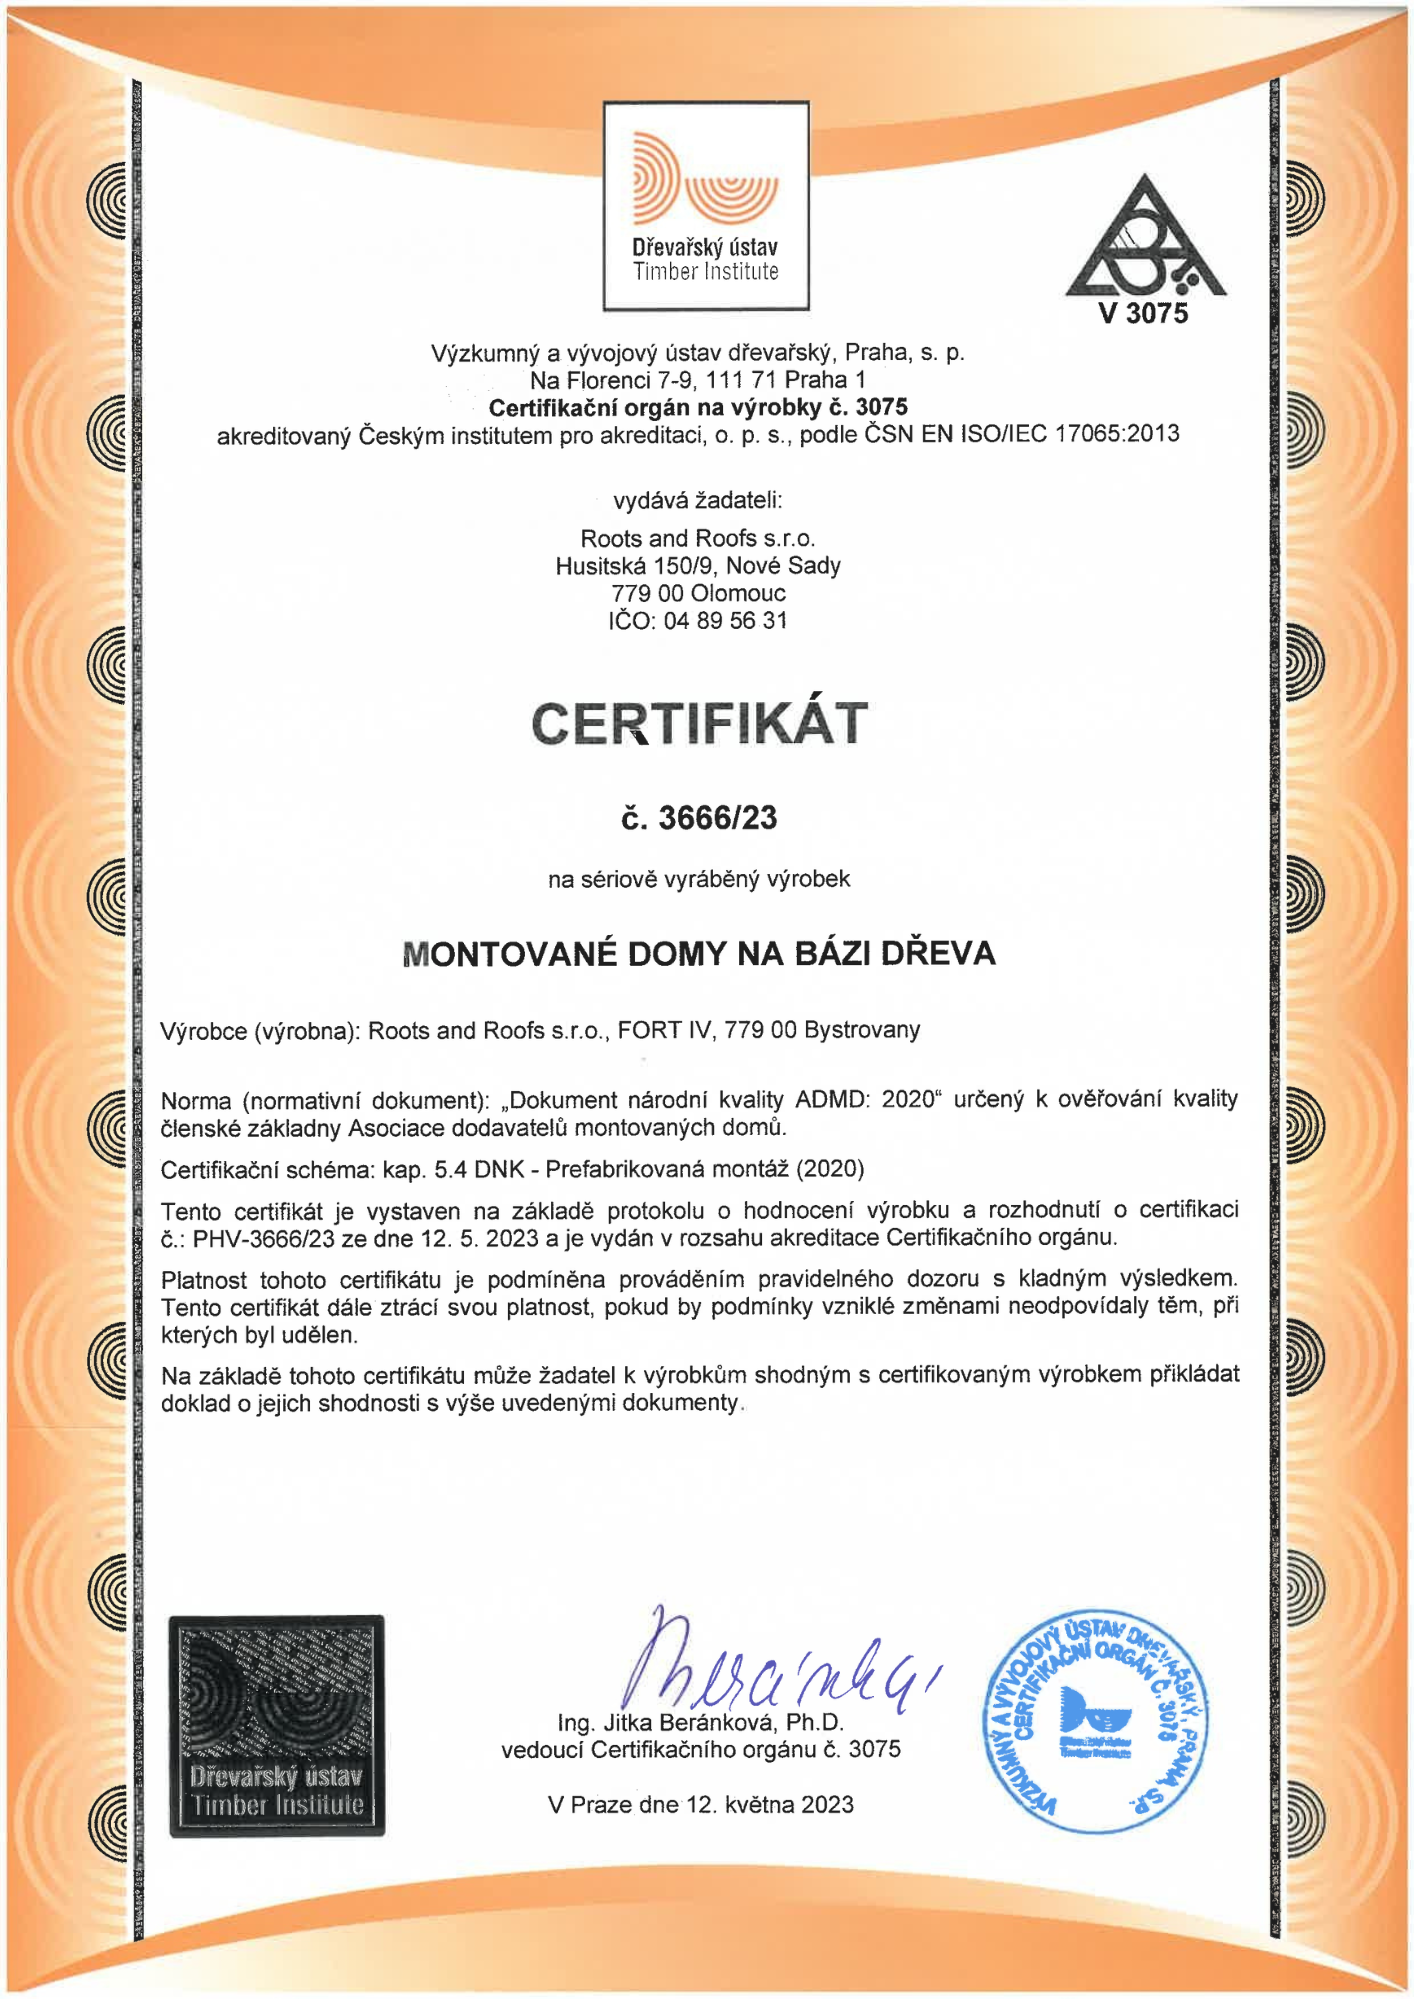 Certifikat-domy-na-bazi-dreva-drevostavby.pdf